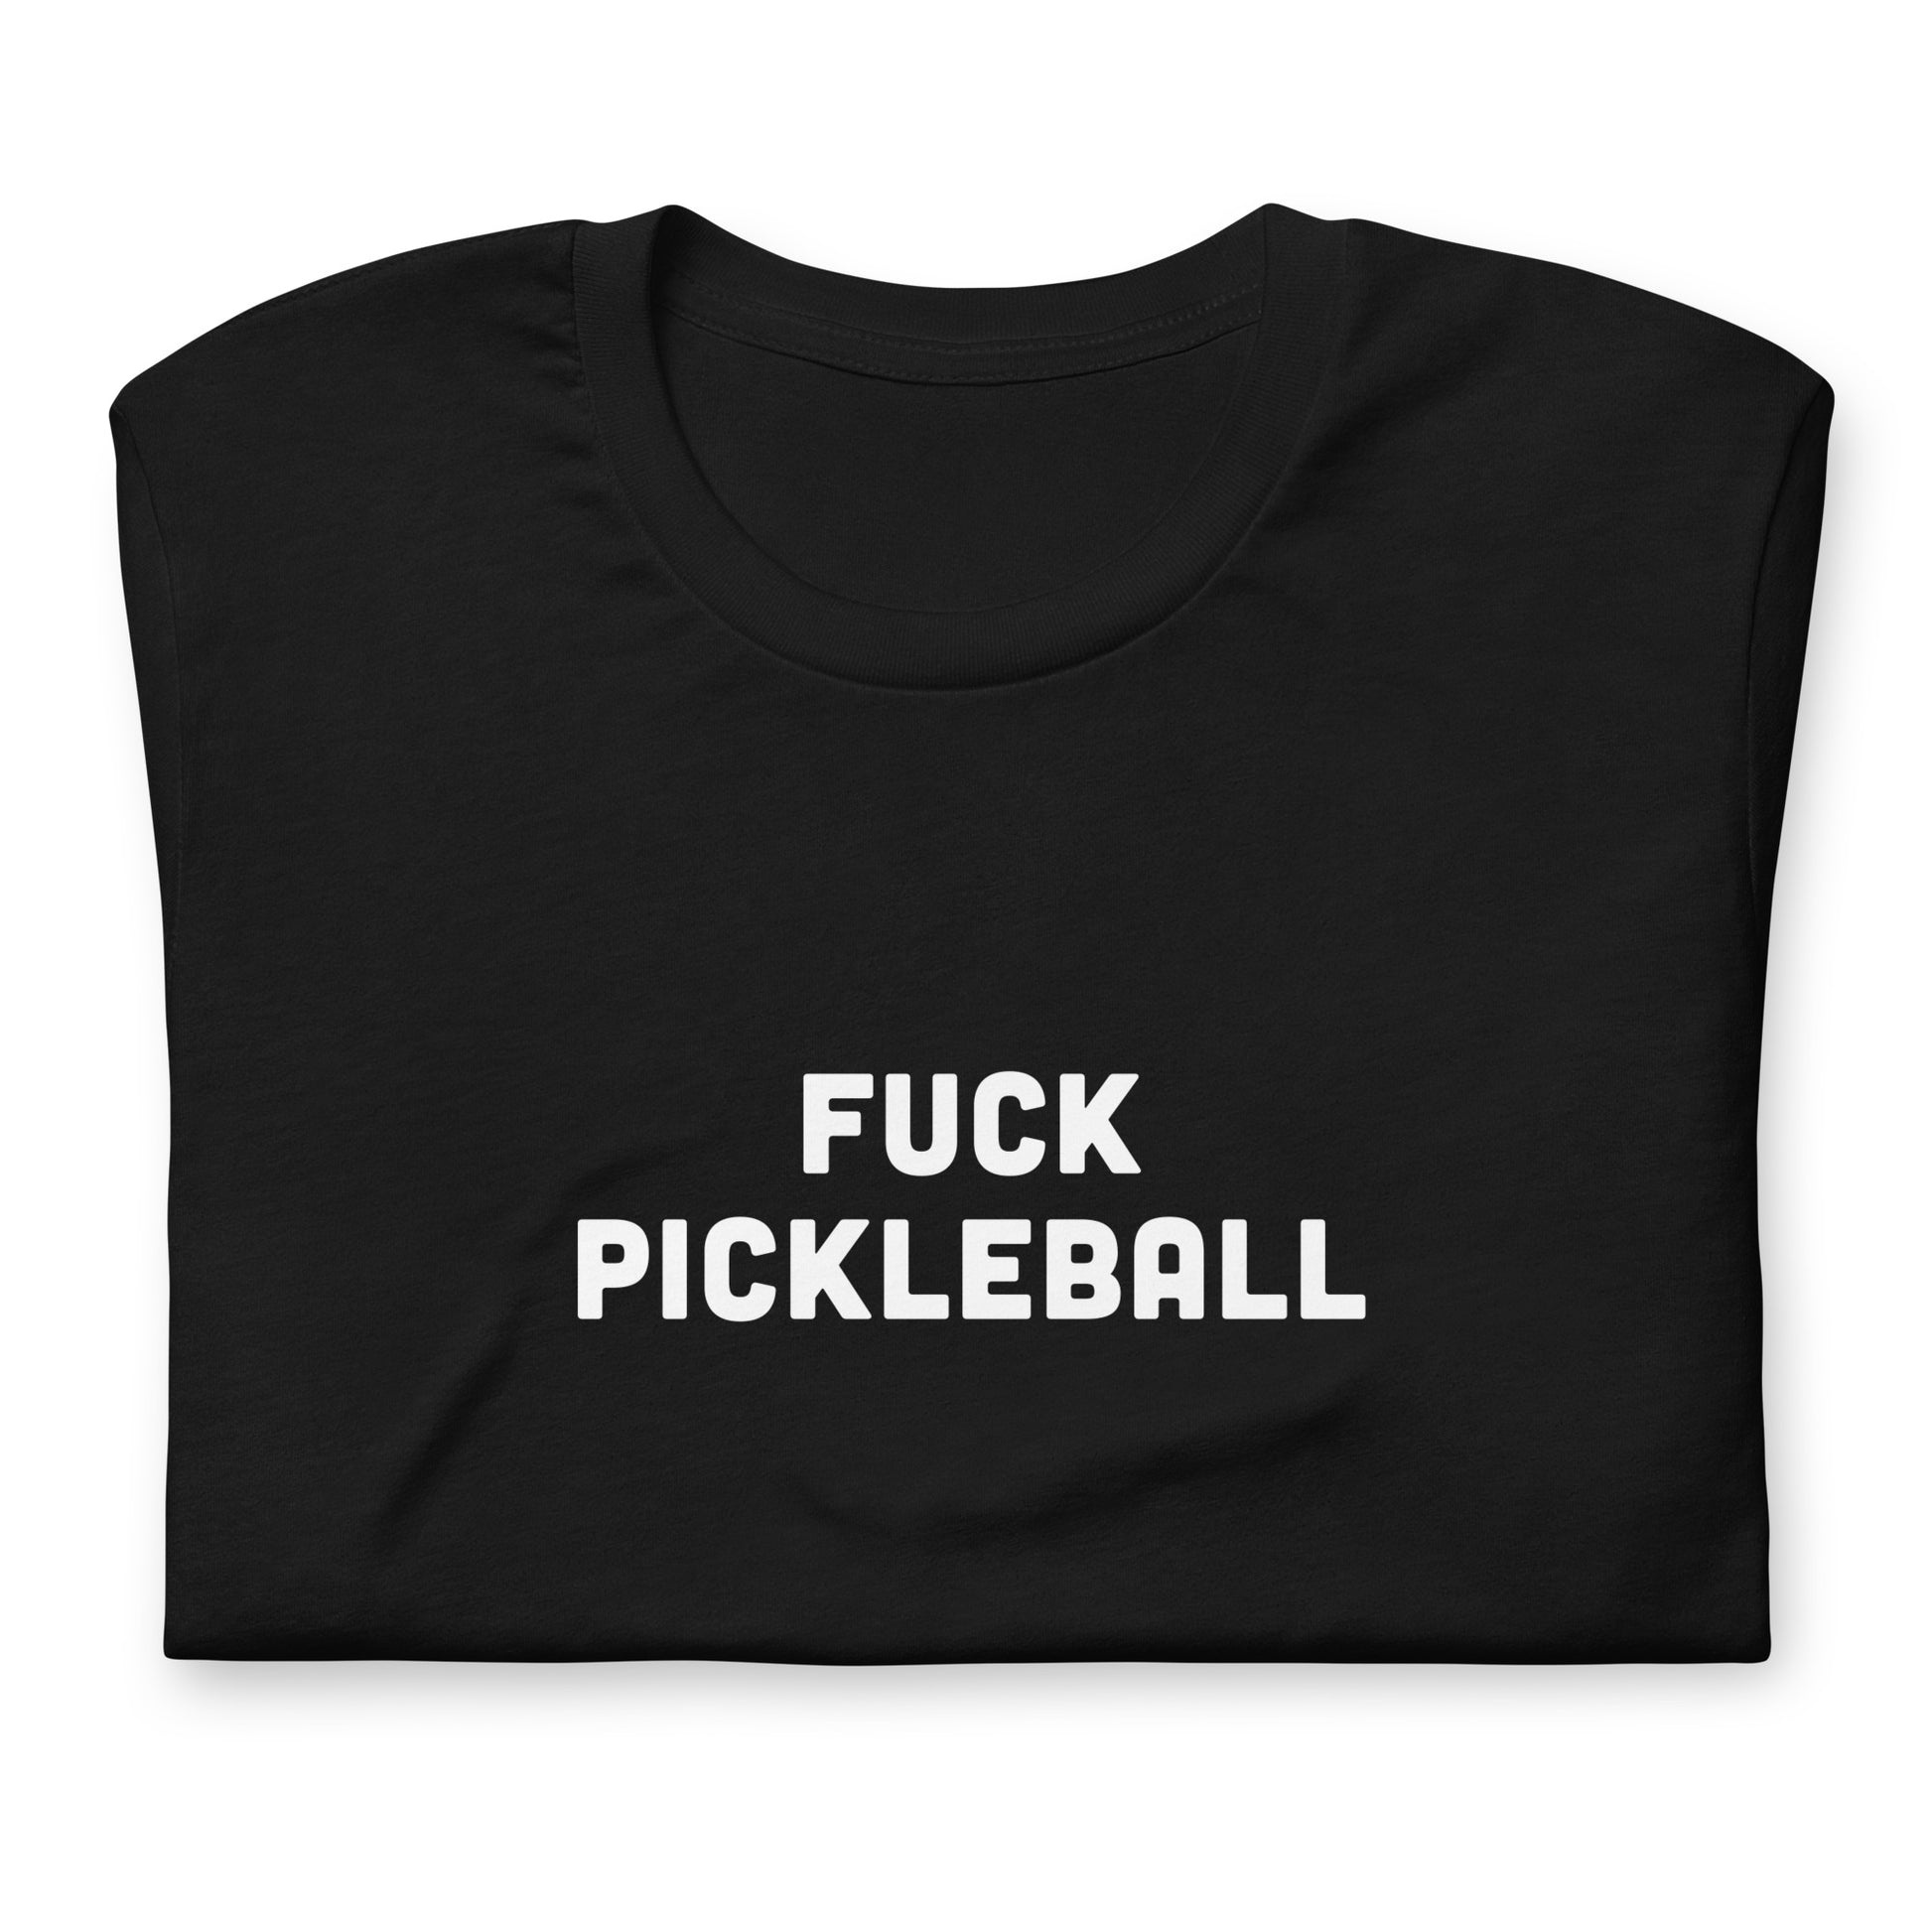 Fuck Pickleball T-Shirt Size M Color Black